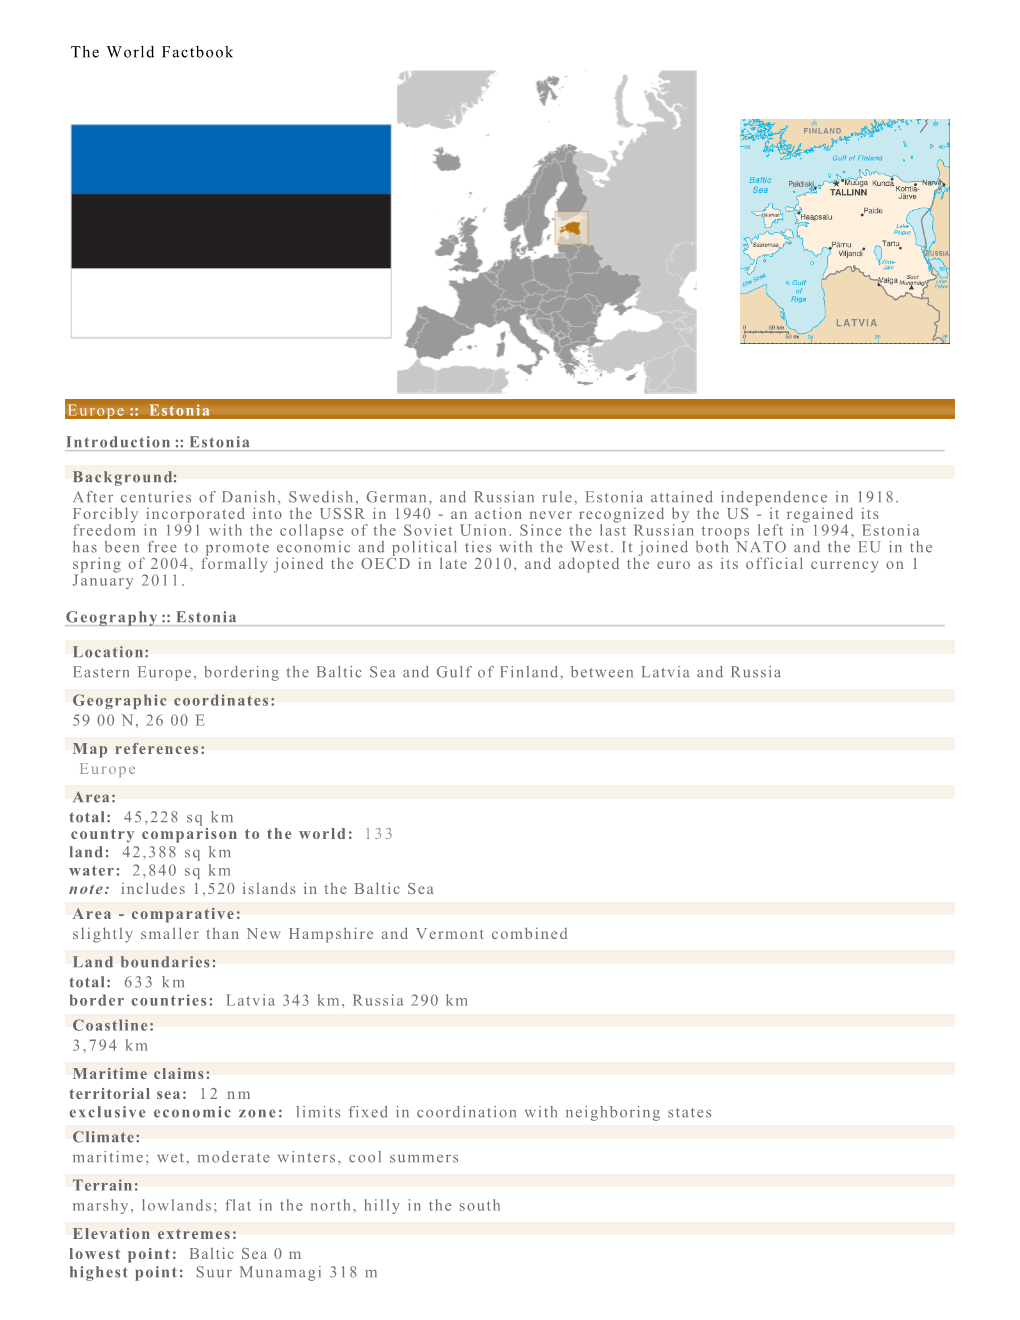 The World Factbook Europe :: Estonia Introduction :: Estonia Background